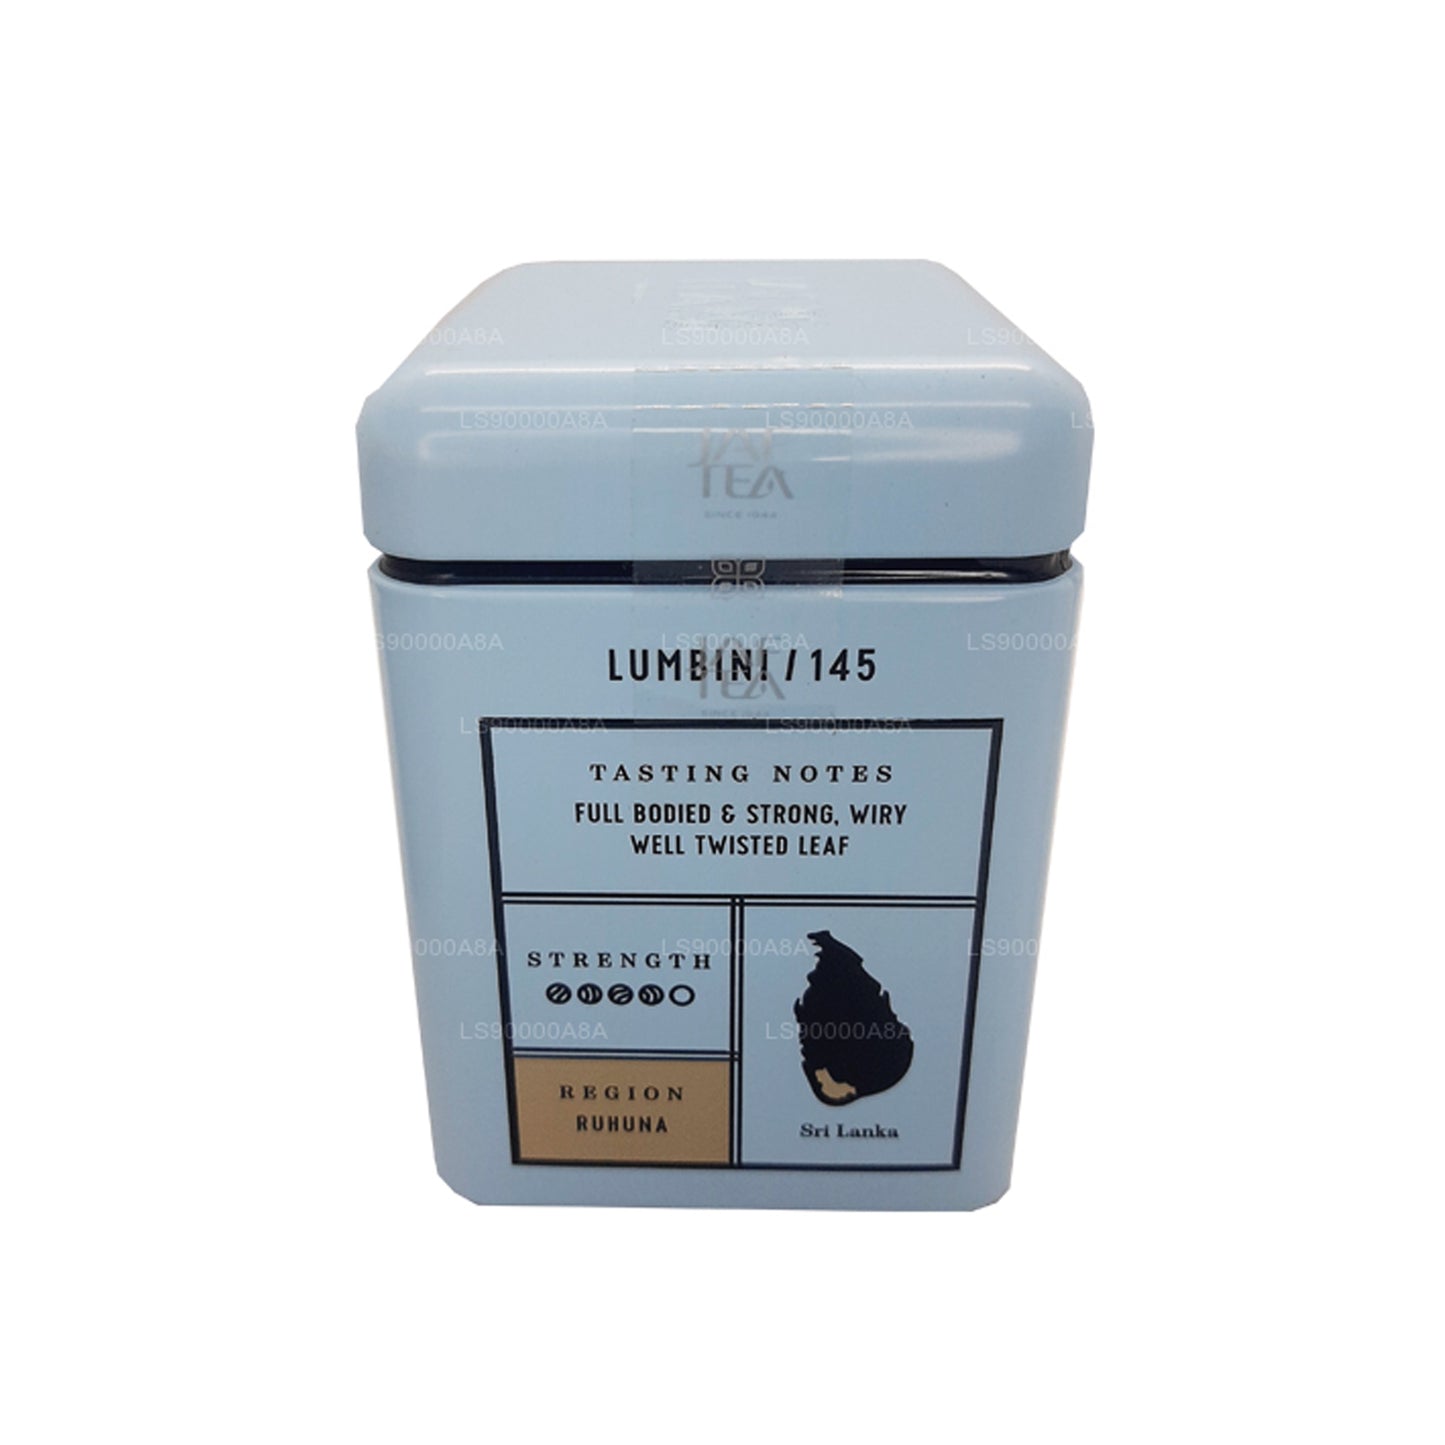 Jaf Tea Single Estate Collection Lumbini (100g) Tin